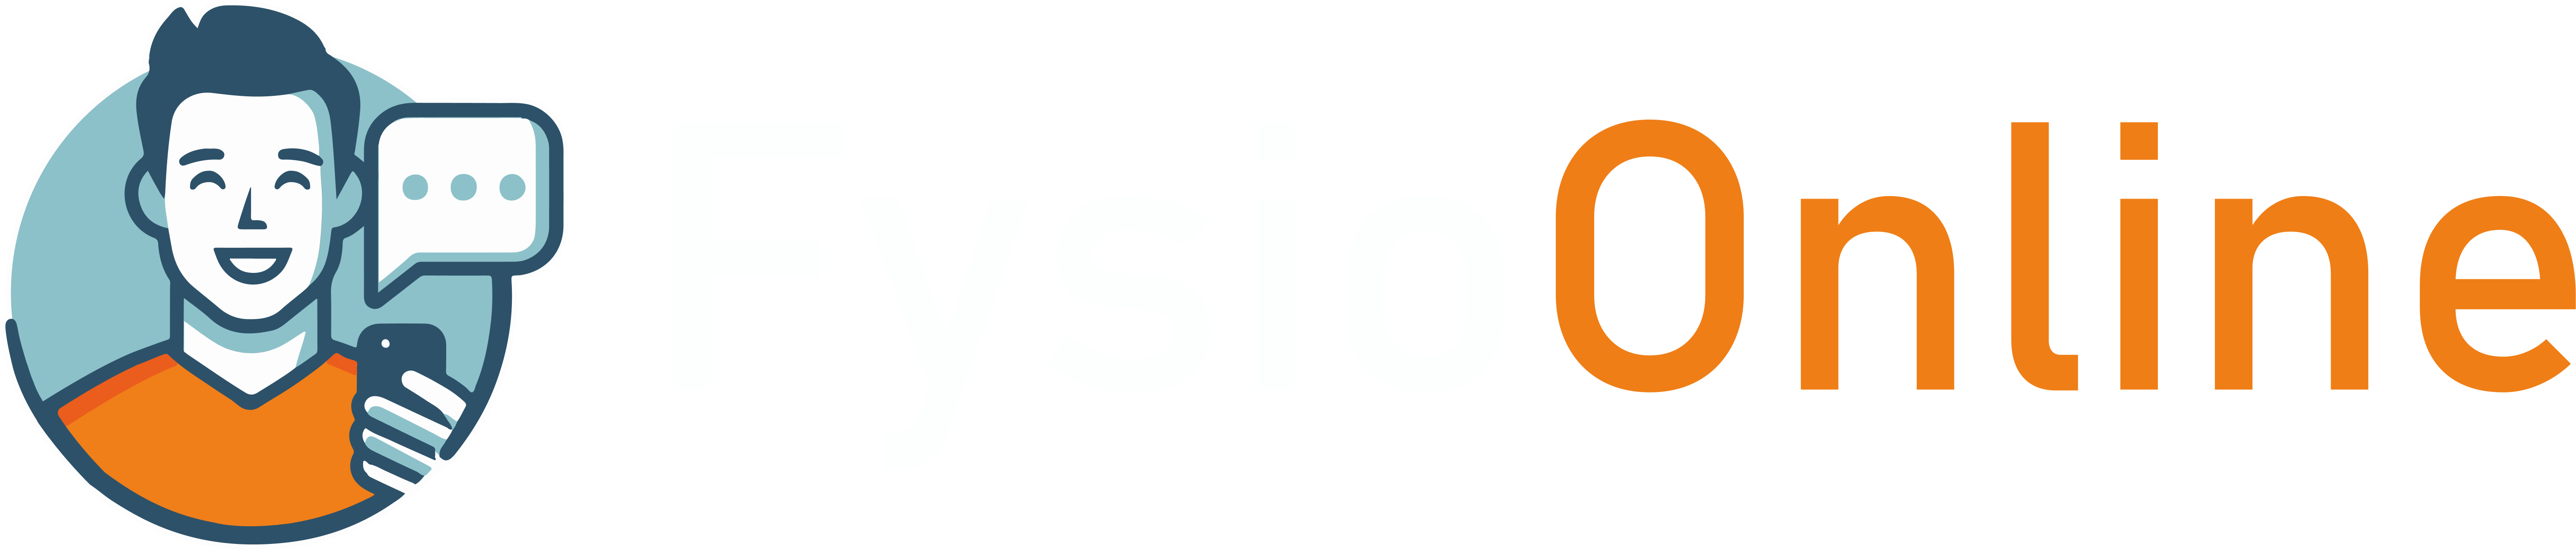 FysioOnline logo